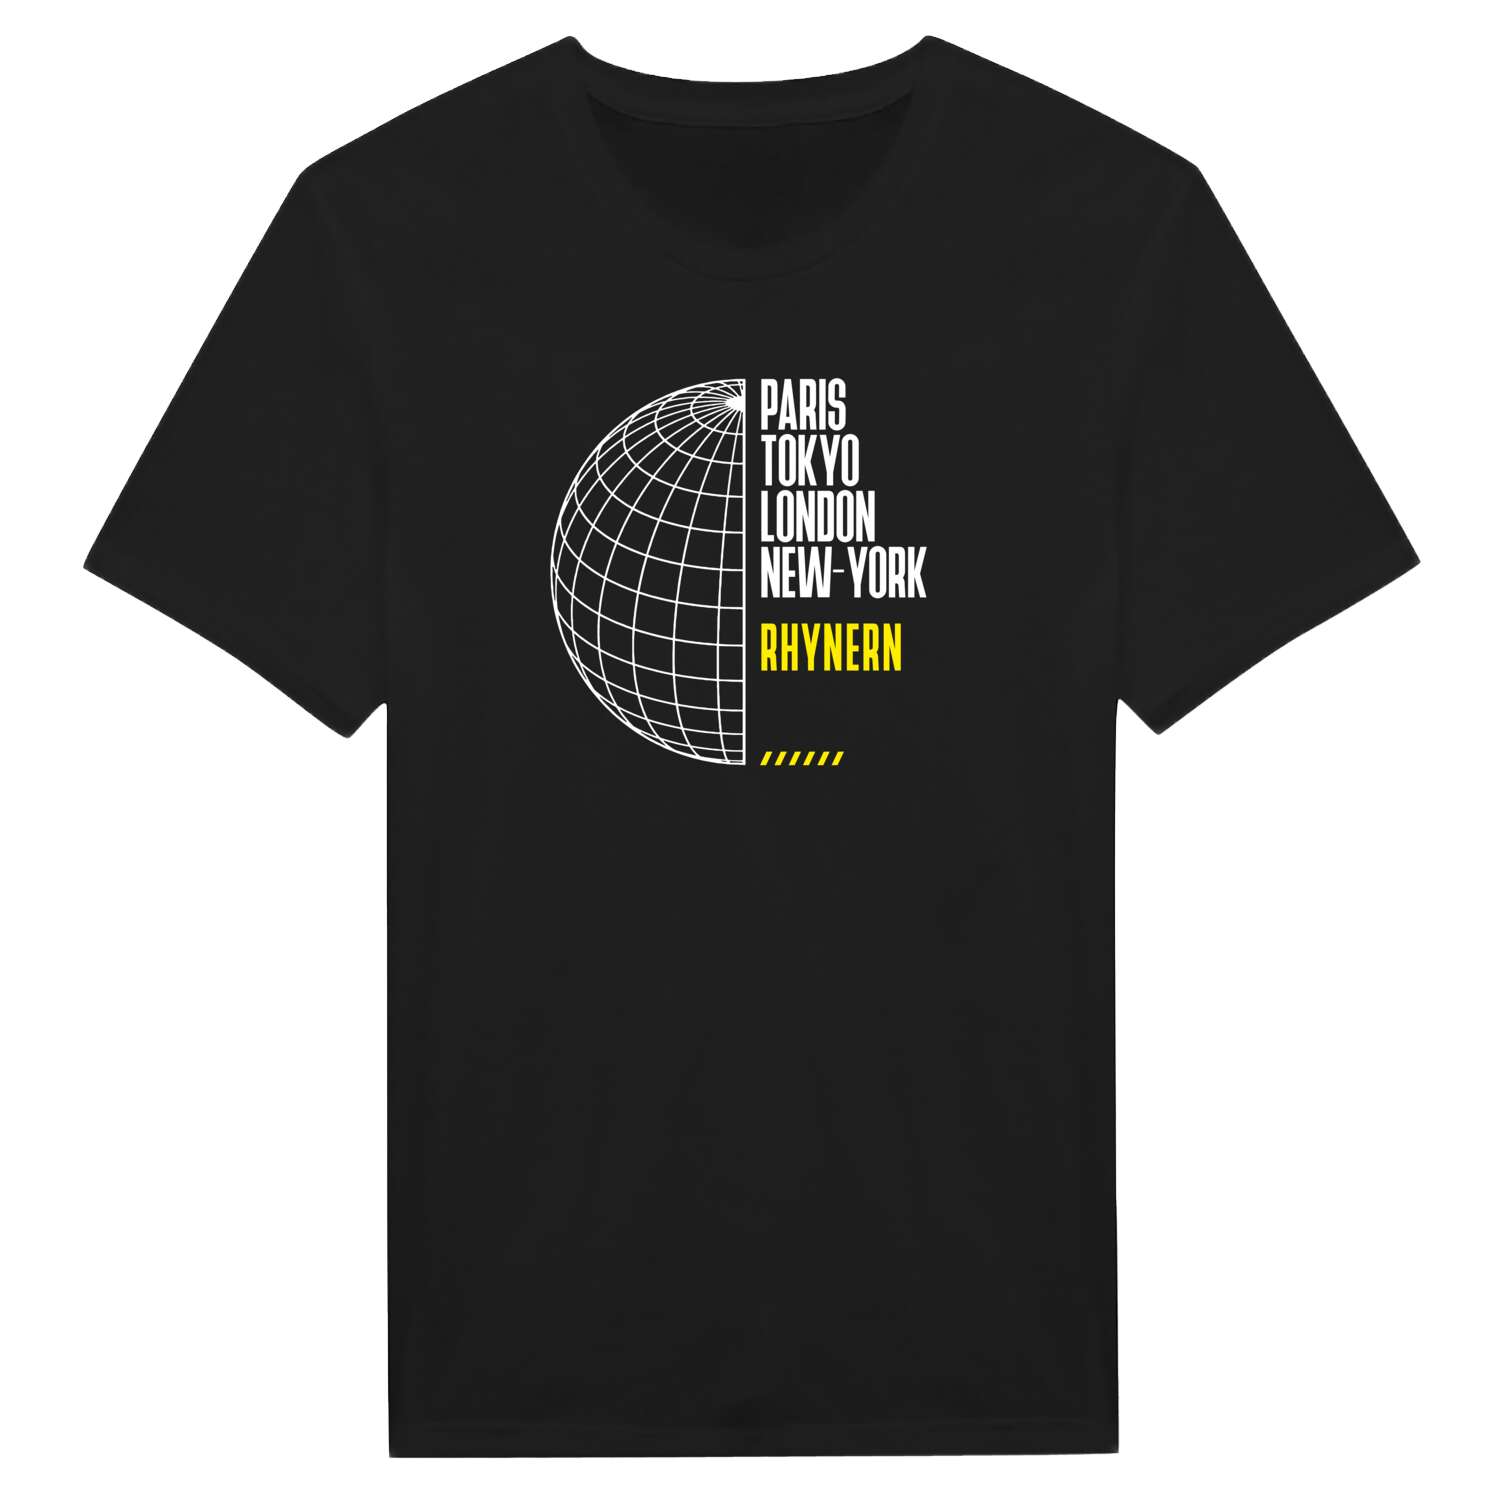 Rhynern T-Shirt »Paris Tokyo London«